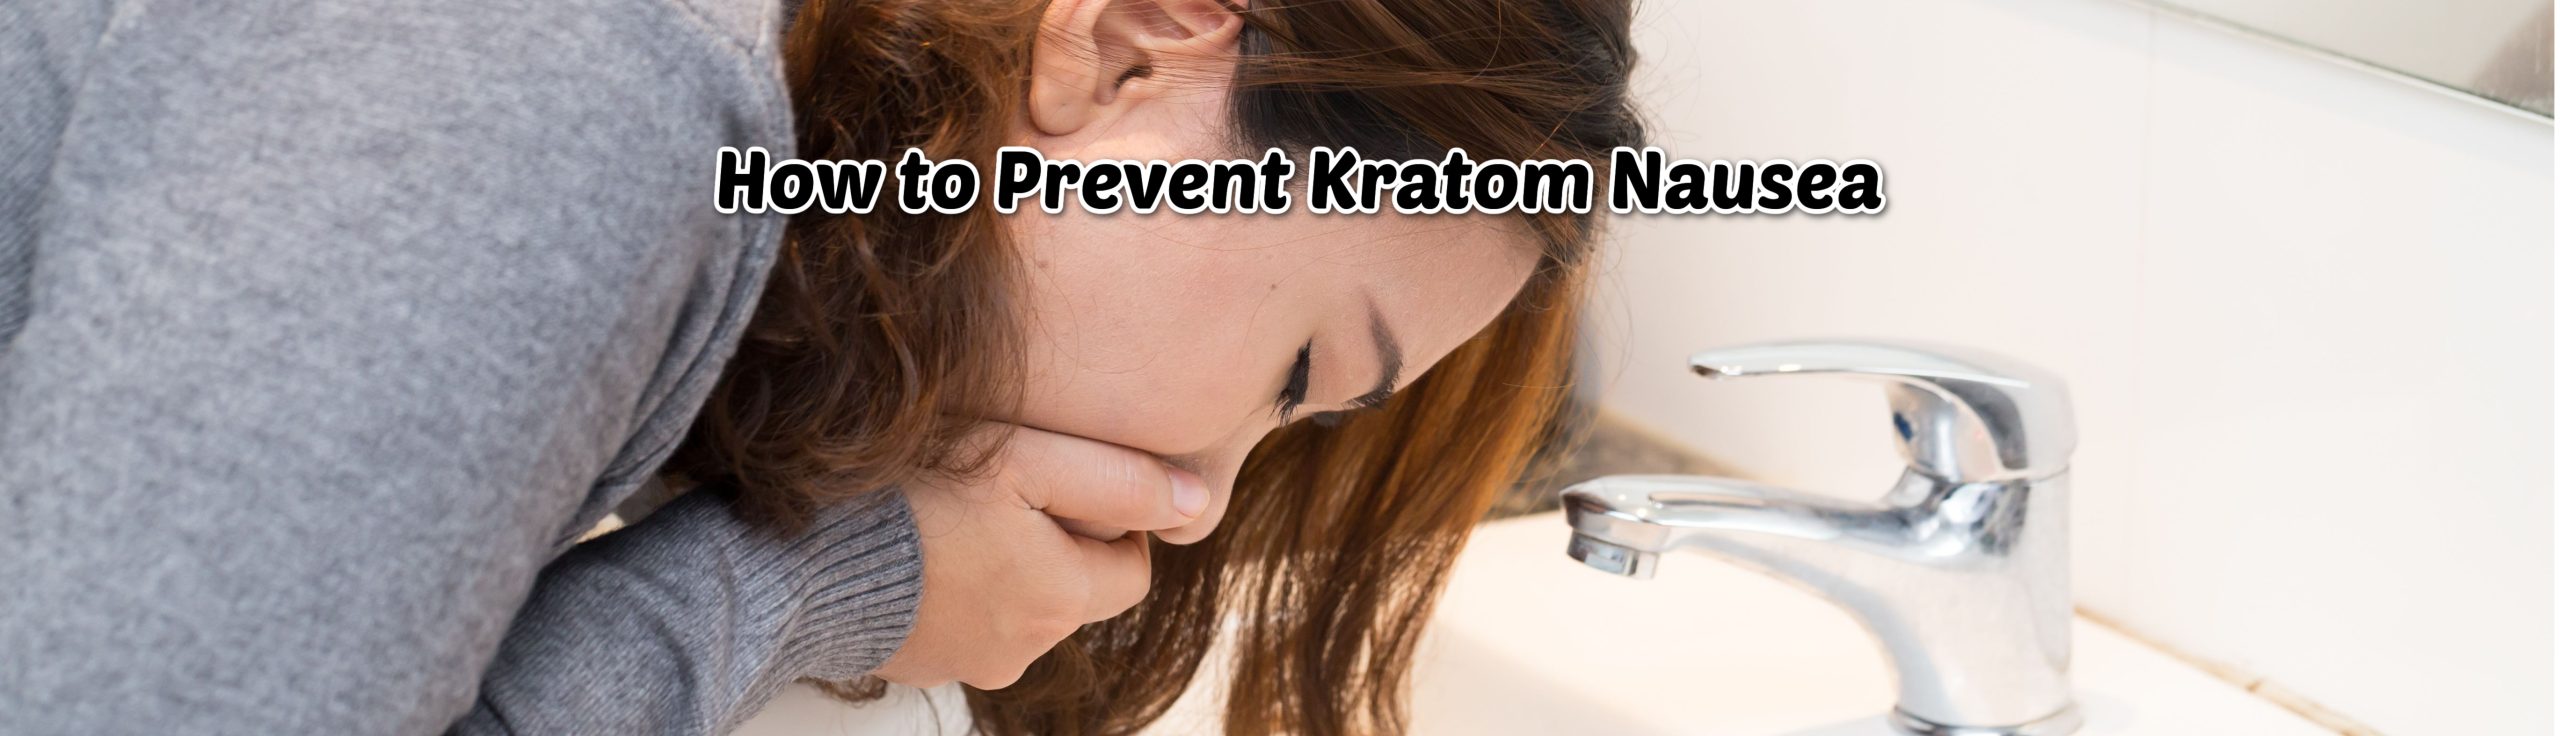 image of how to prevent kratom nausea